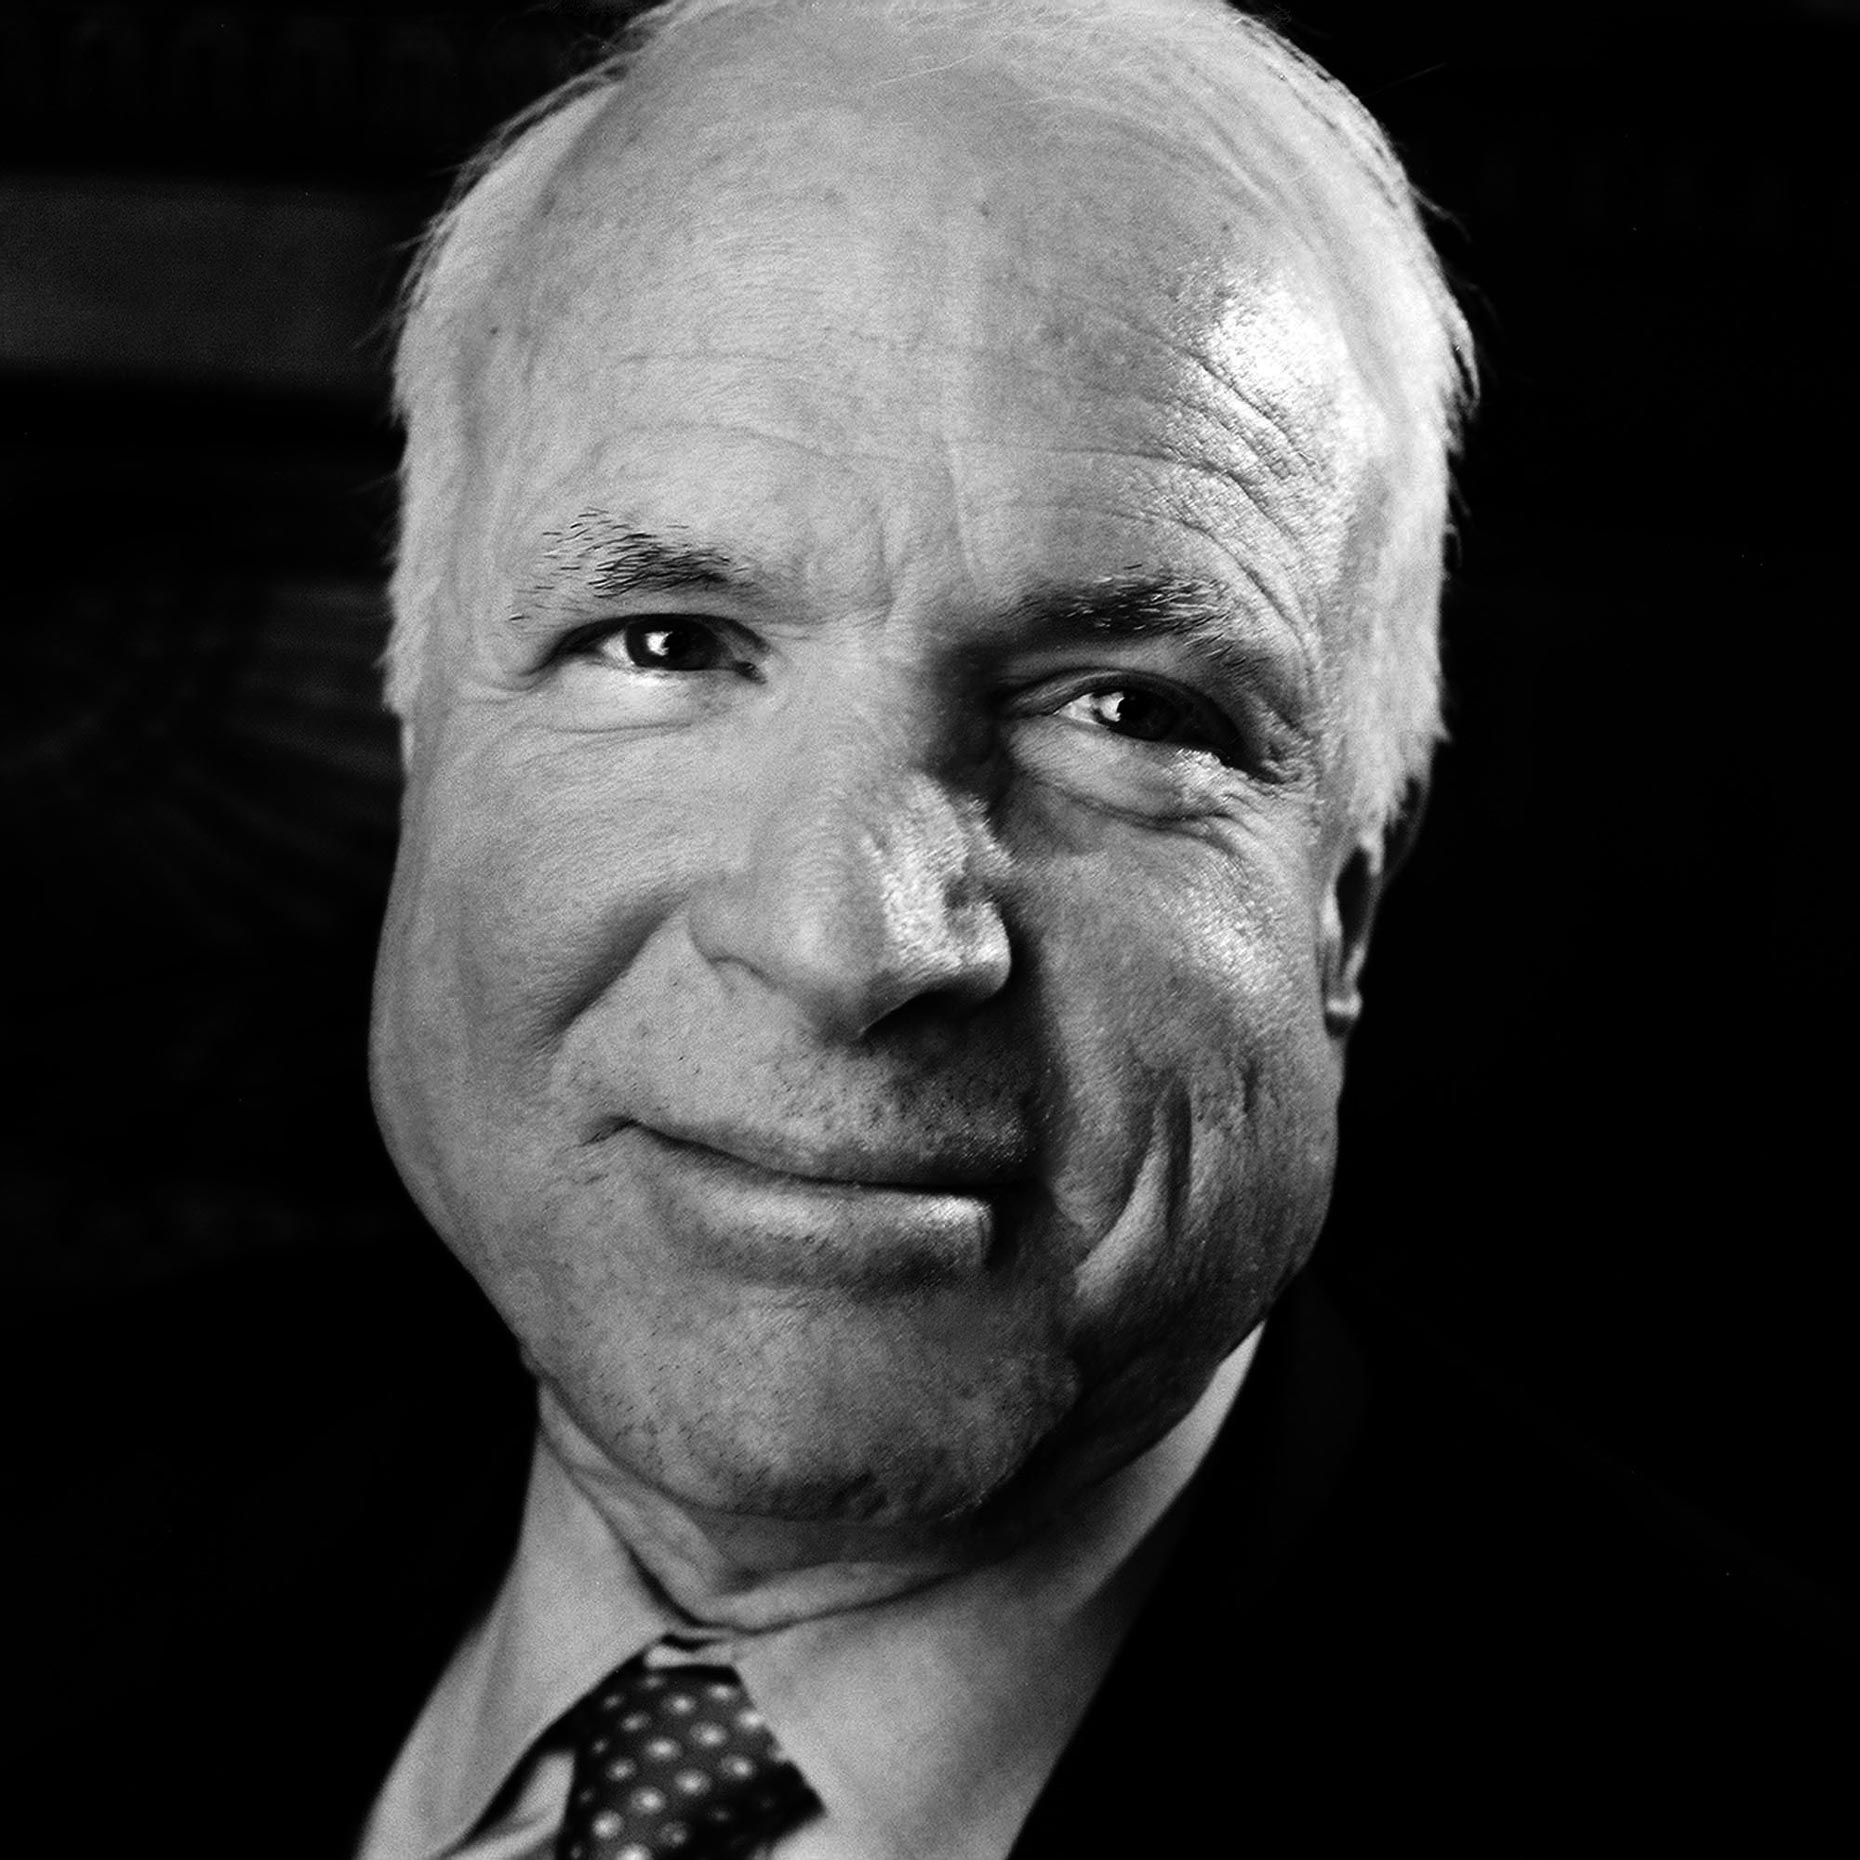 McCain_3_2018_revision